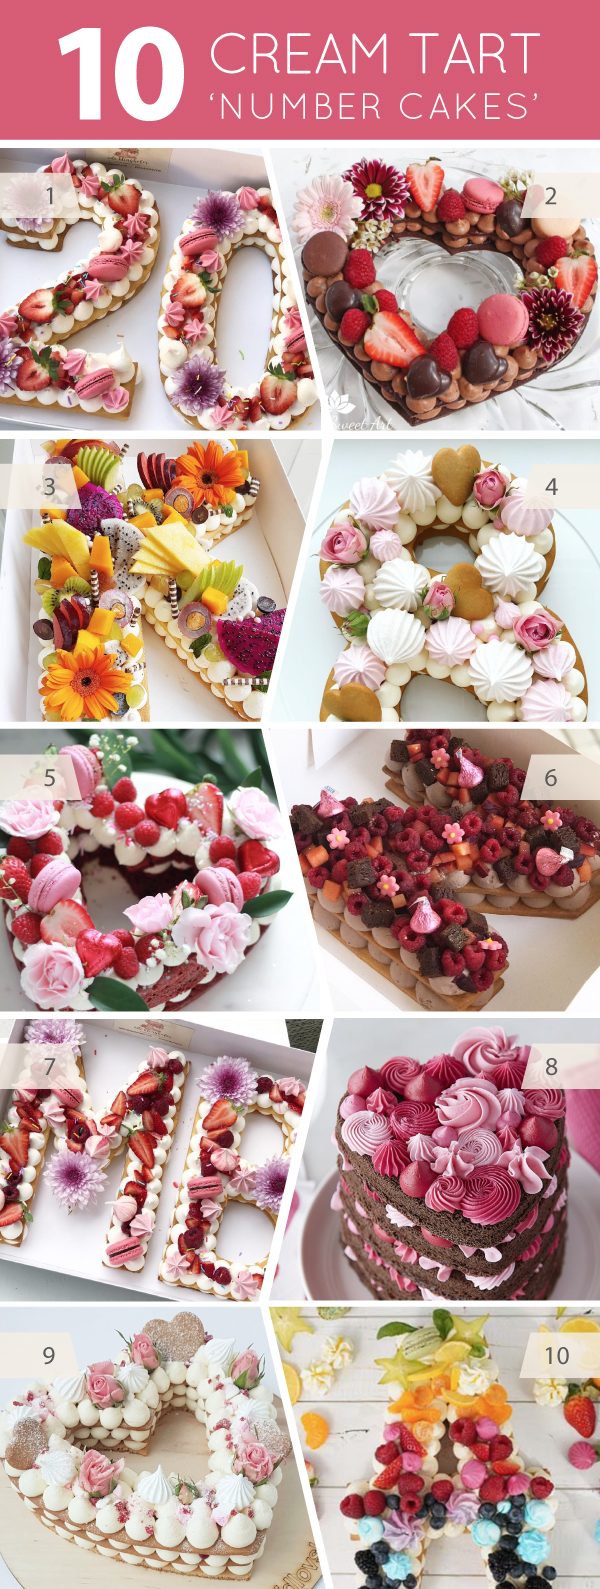 10 Cream Tart "Number Cakes" | on TheCakeBlog.com